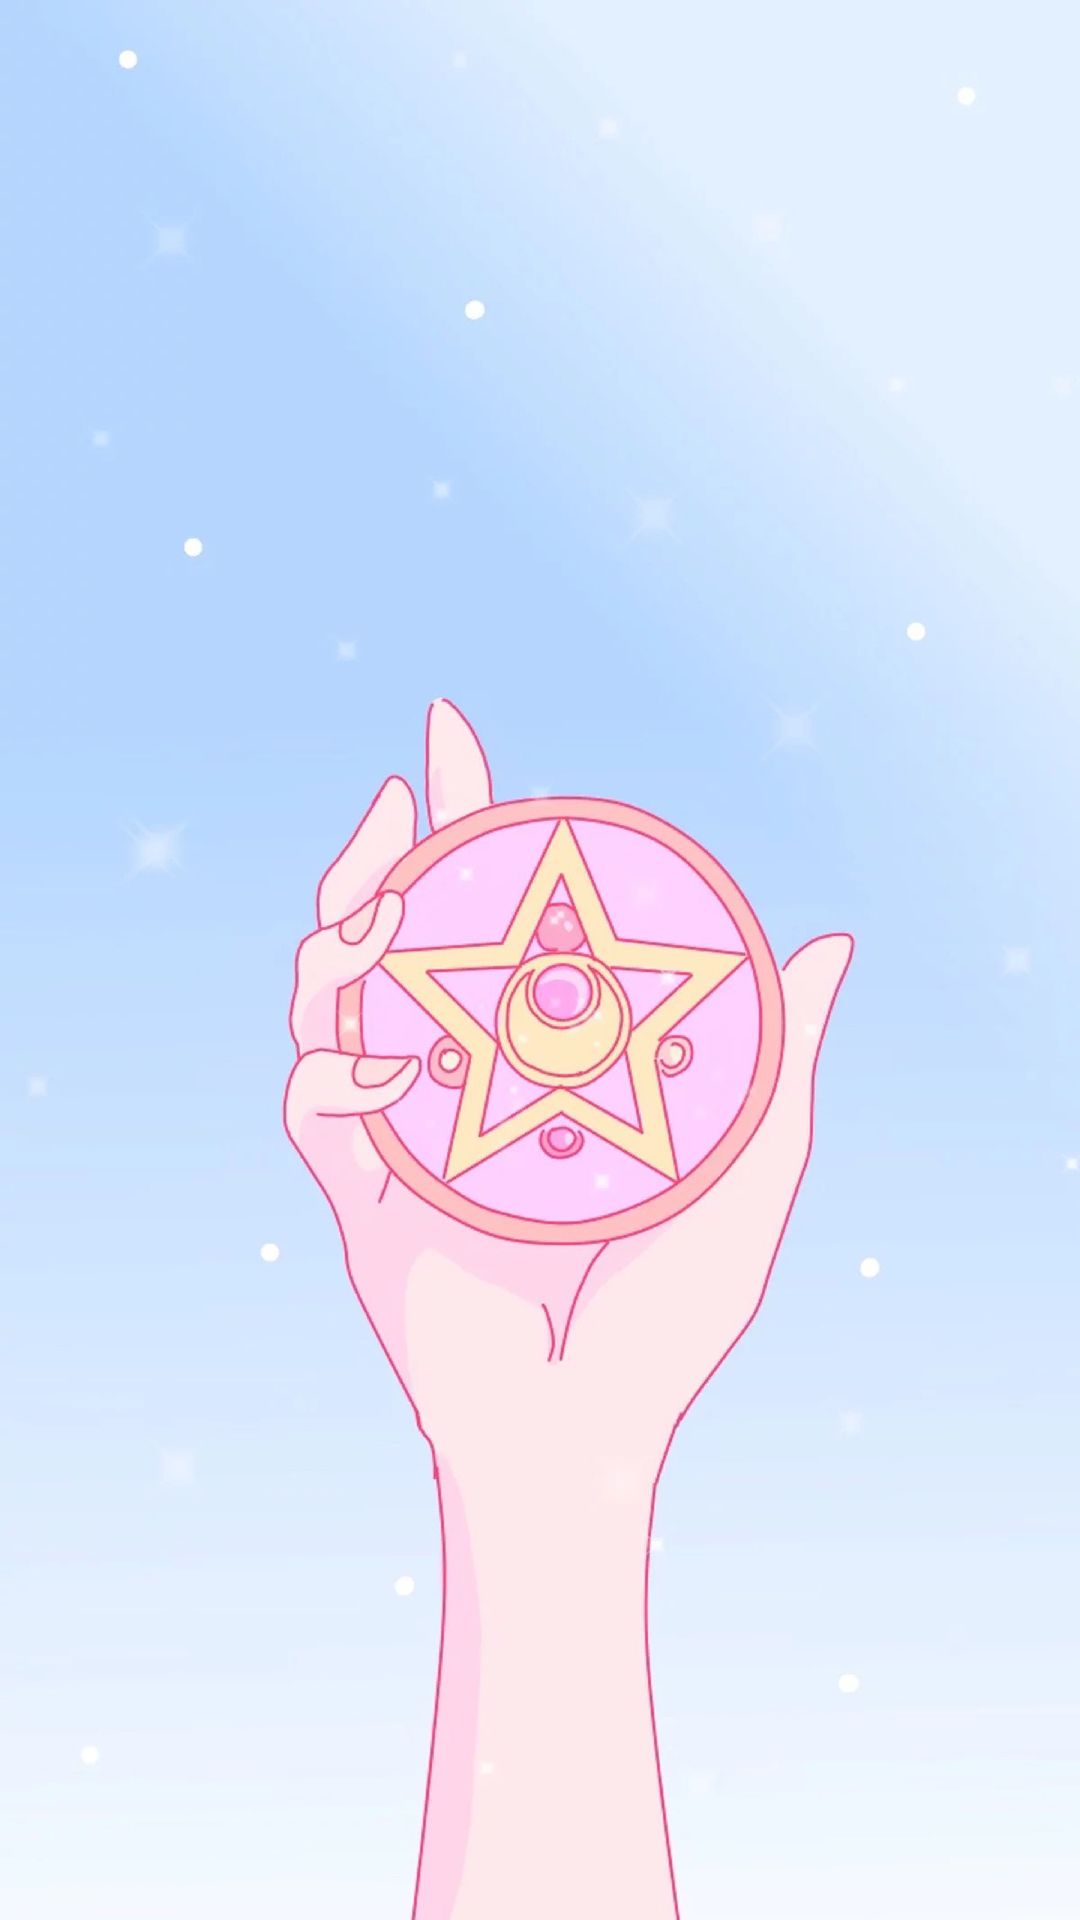 Sailor Moon iphone wallpaper by SailorTrekkie92 on DeviantArt